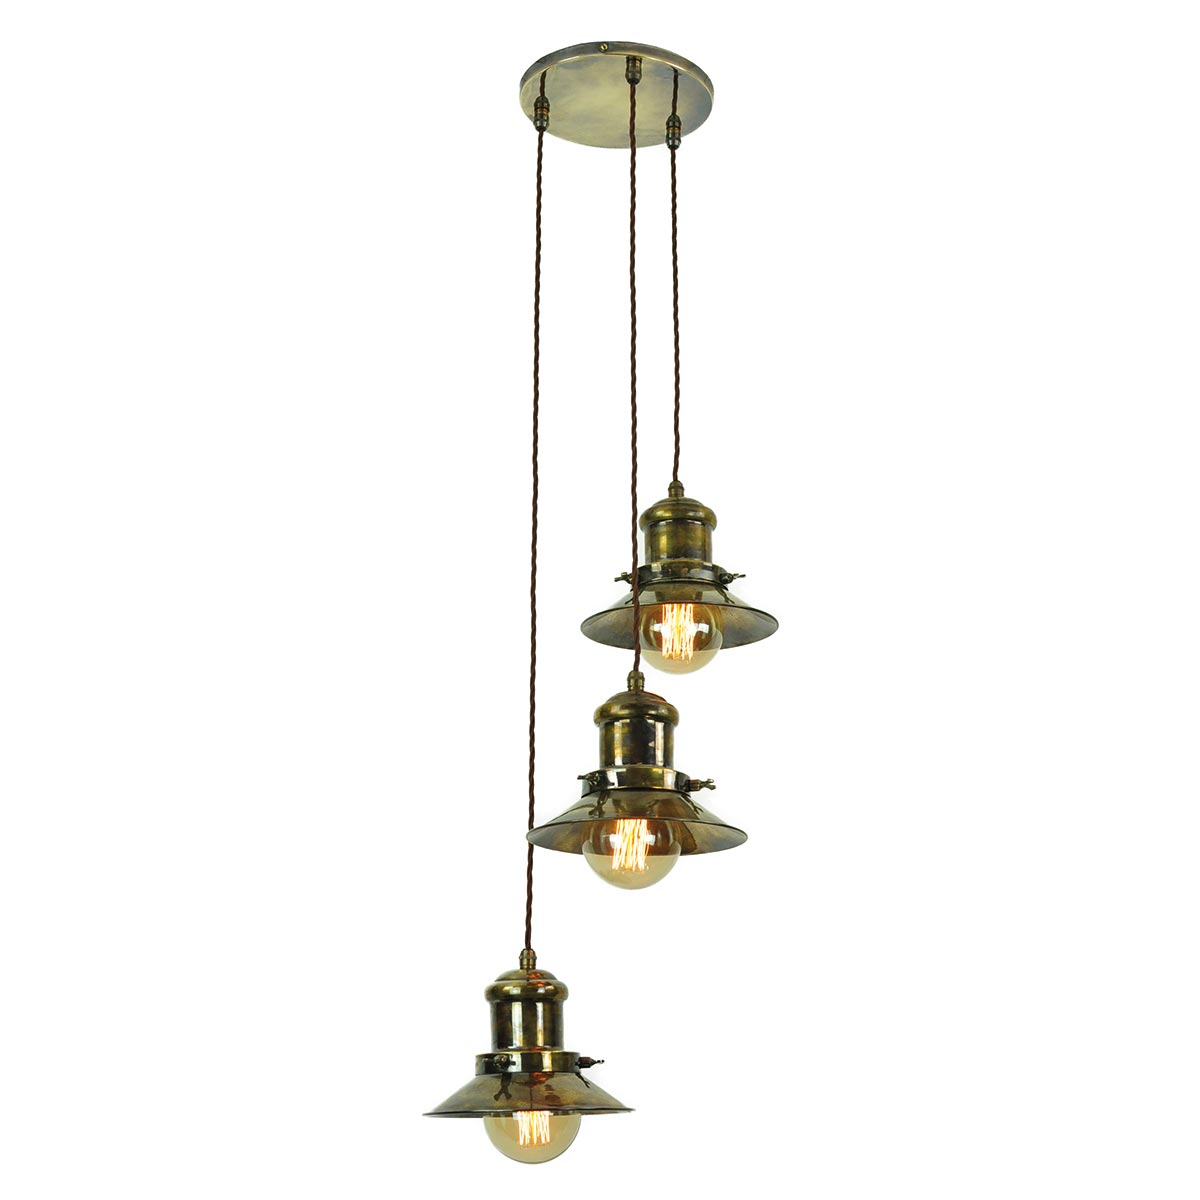 Small Edison Vintage 3 Light Ceiling Pendant Solid Antique Brass